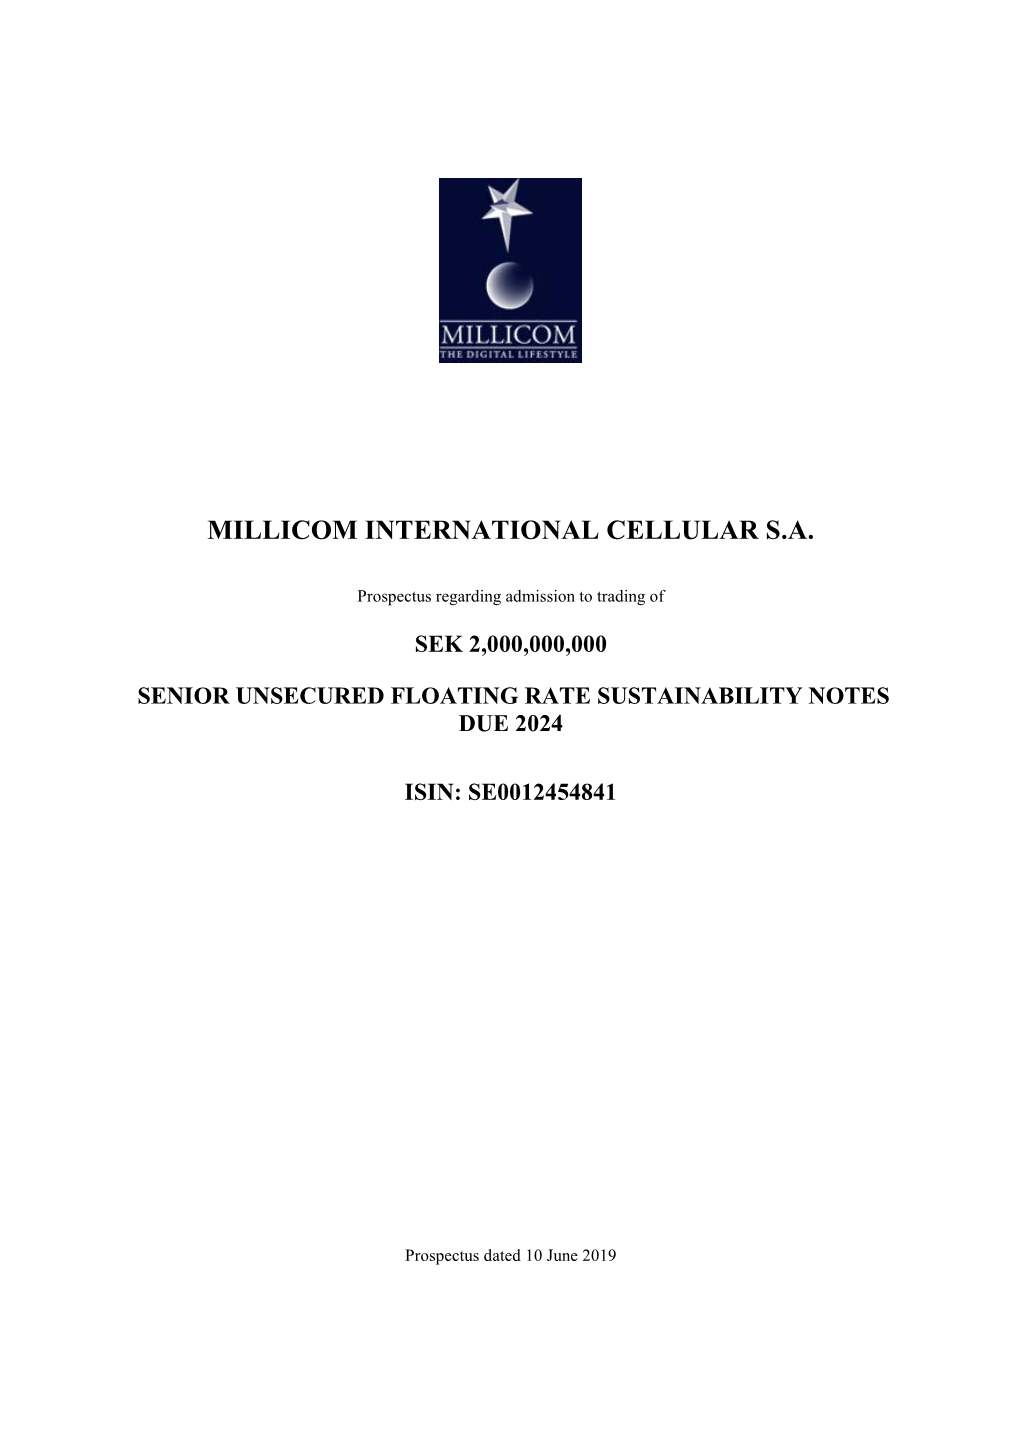 Millicom International Cellular S.A